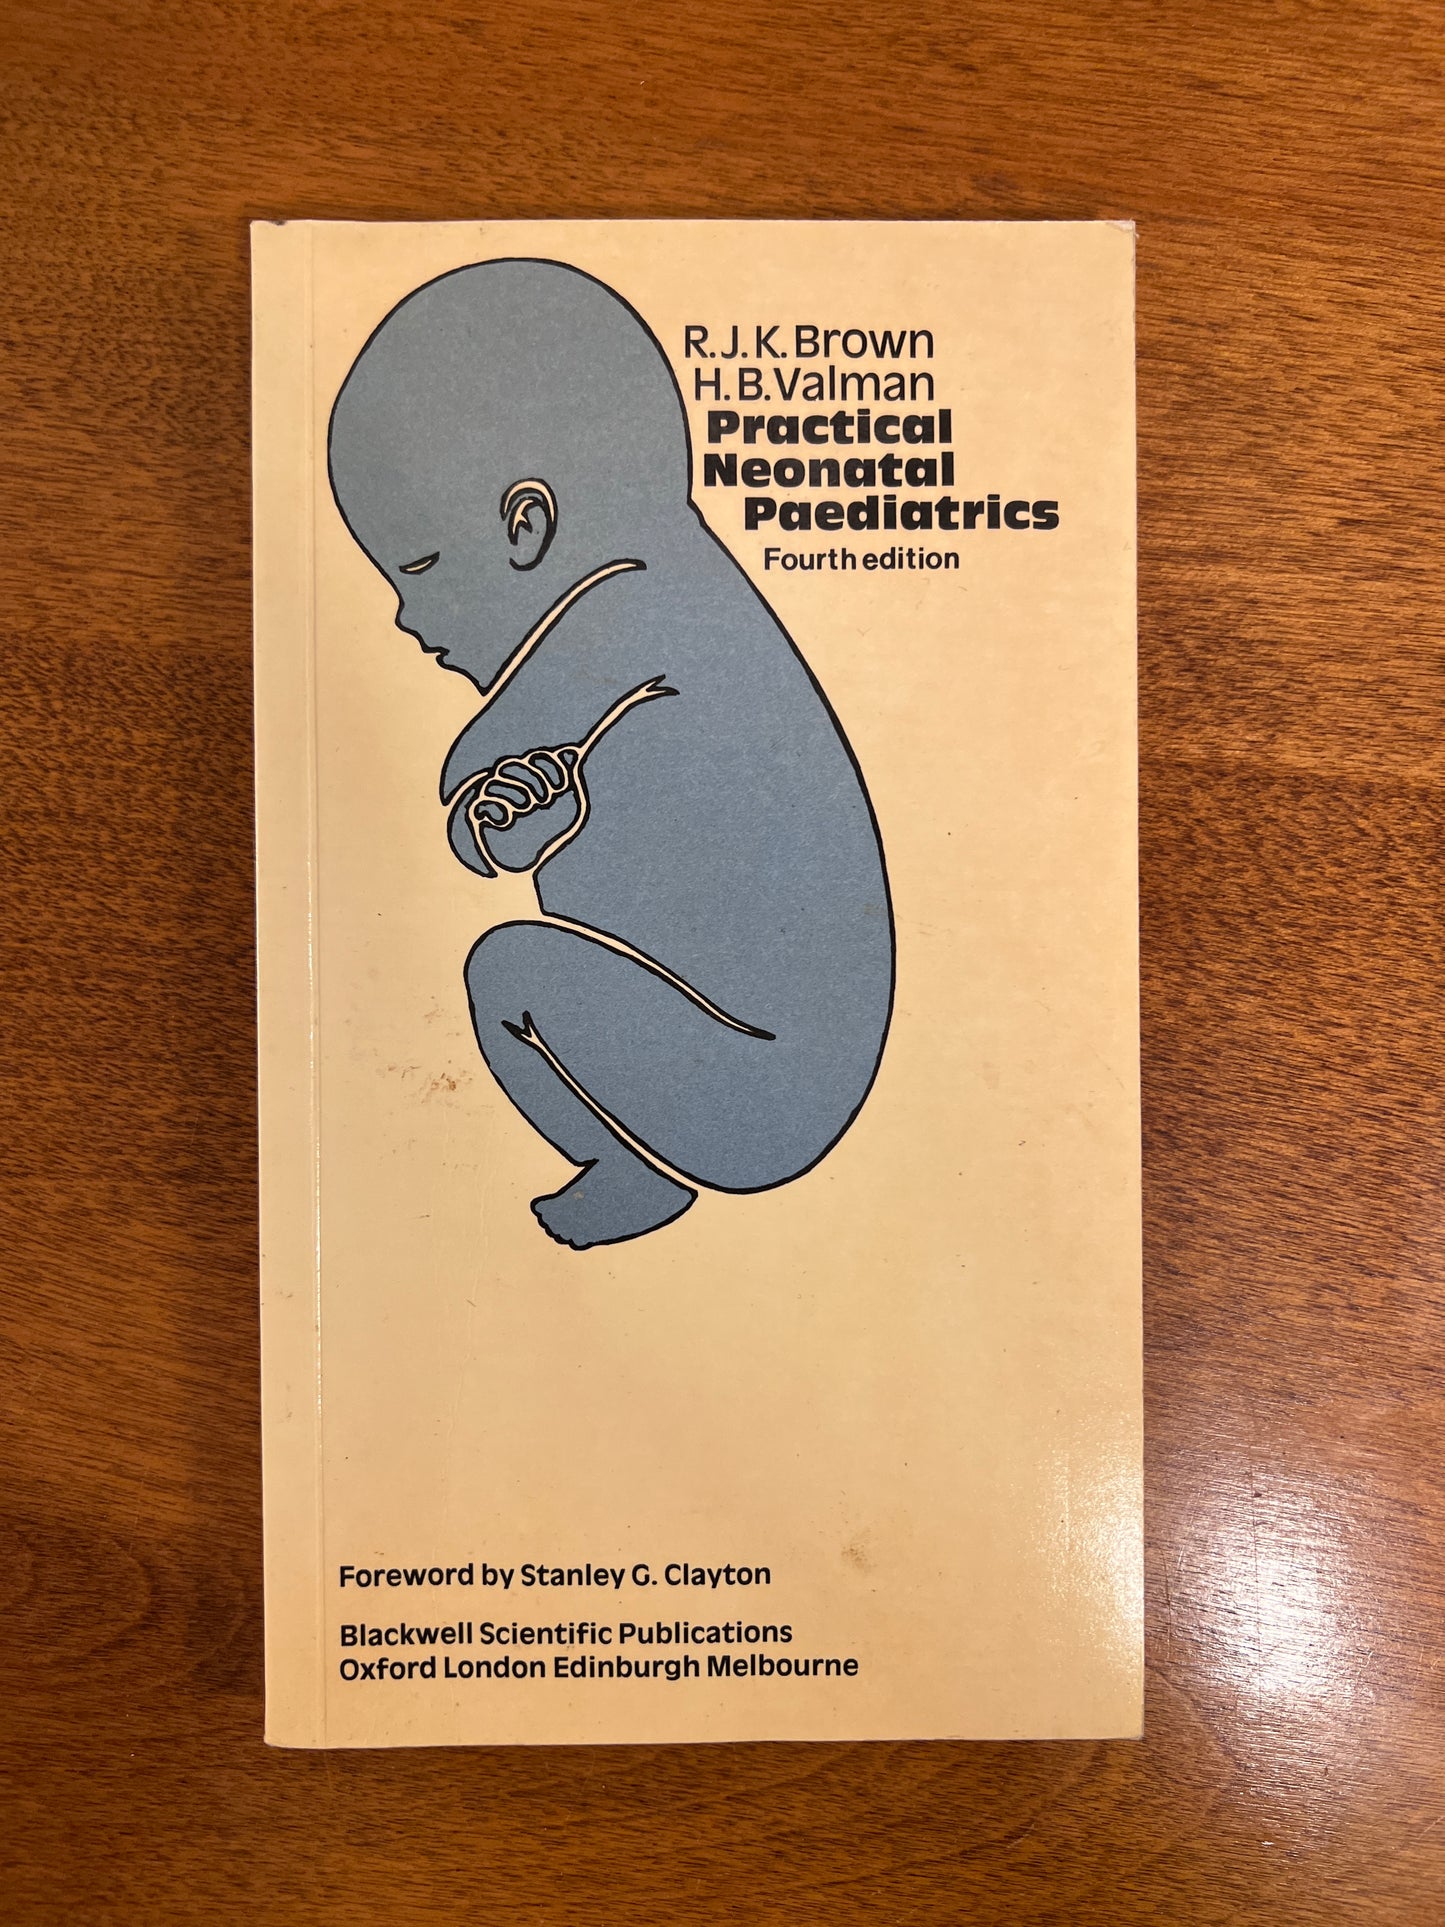 Practical Neonatal Paediatrics by R. J. K. Brown and H. B. Valman 1979